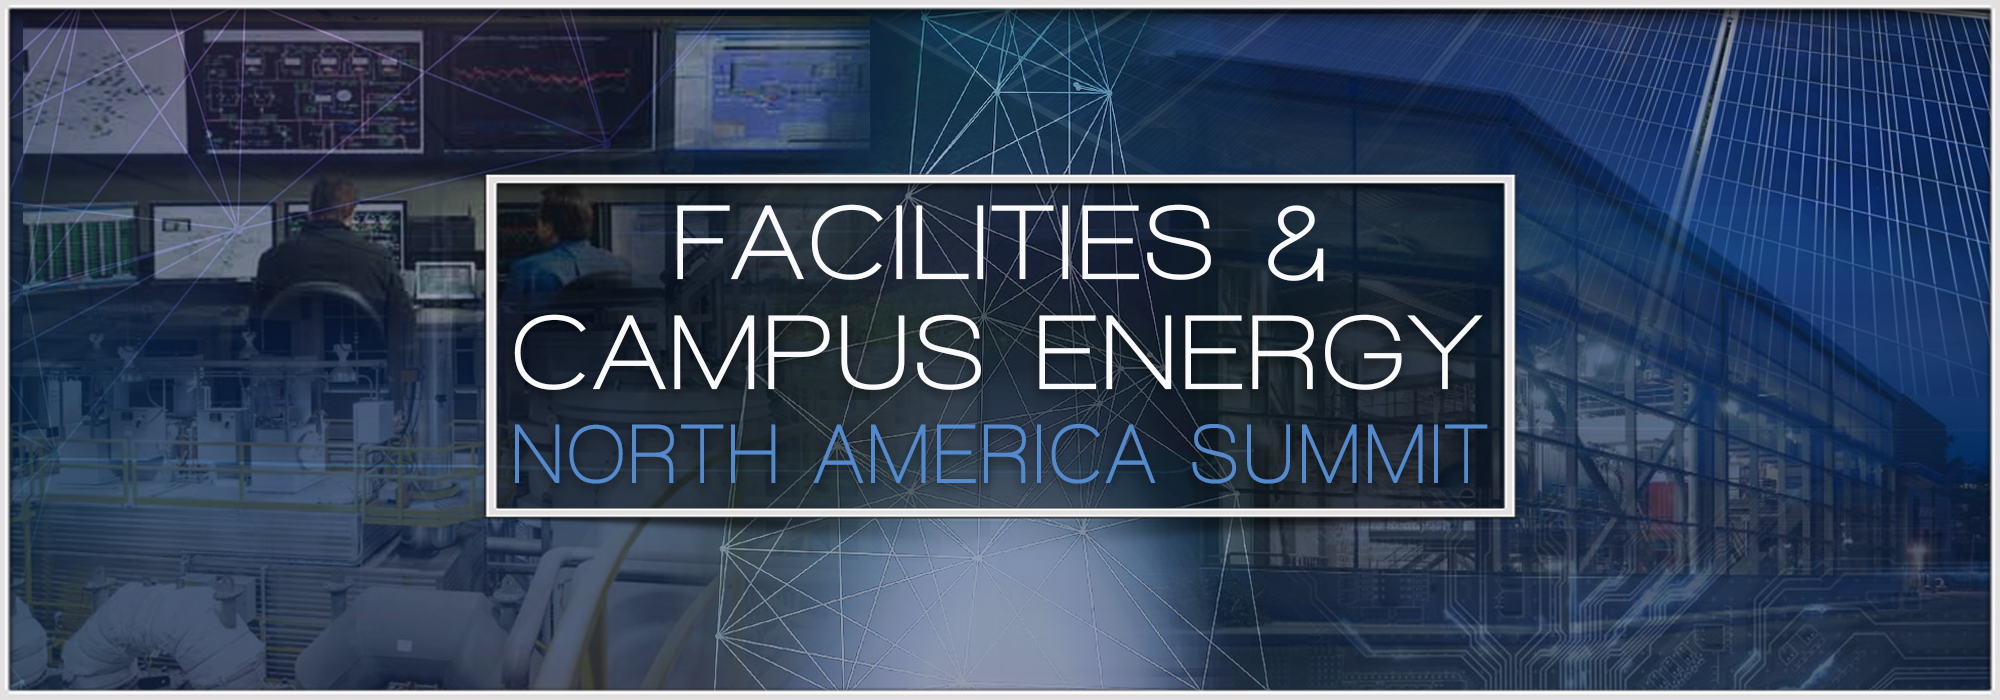 Roosevelt Strategic Council Facilities & Campus Energy Summit